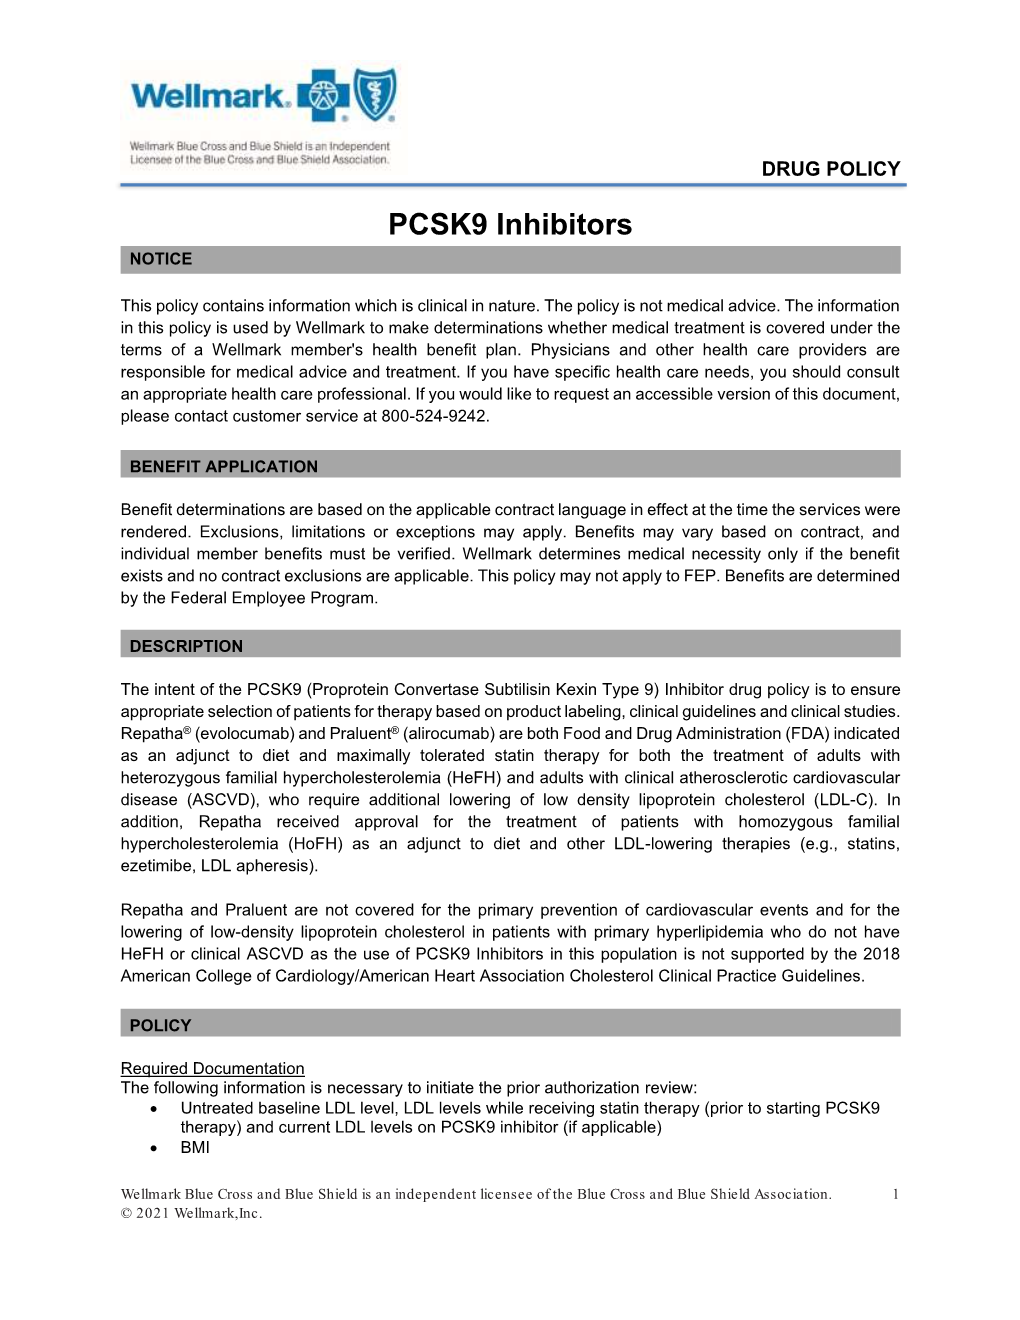 PCSK9 Inhibitors NOTICE